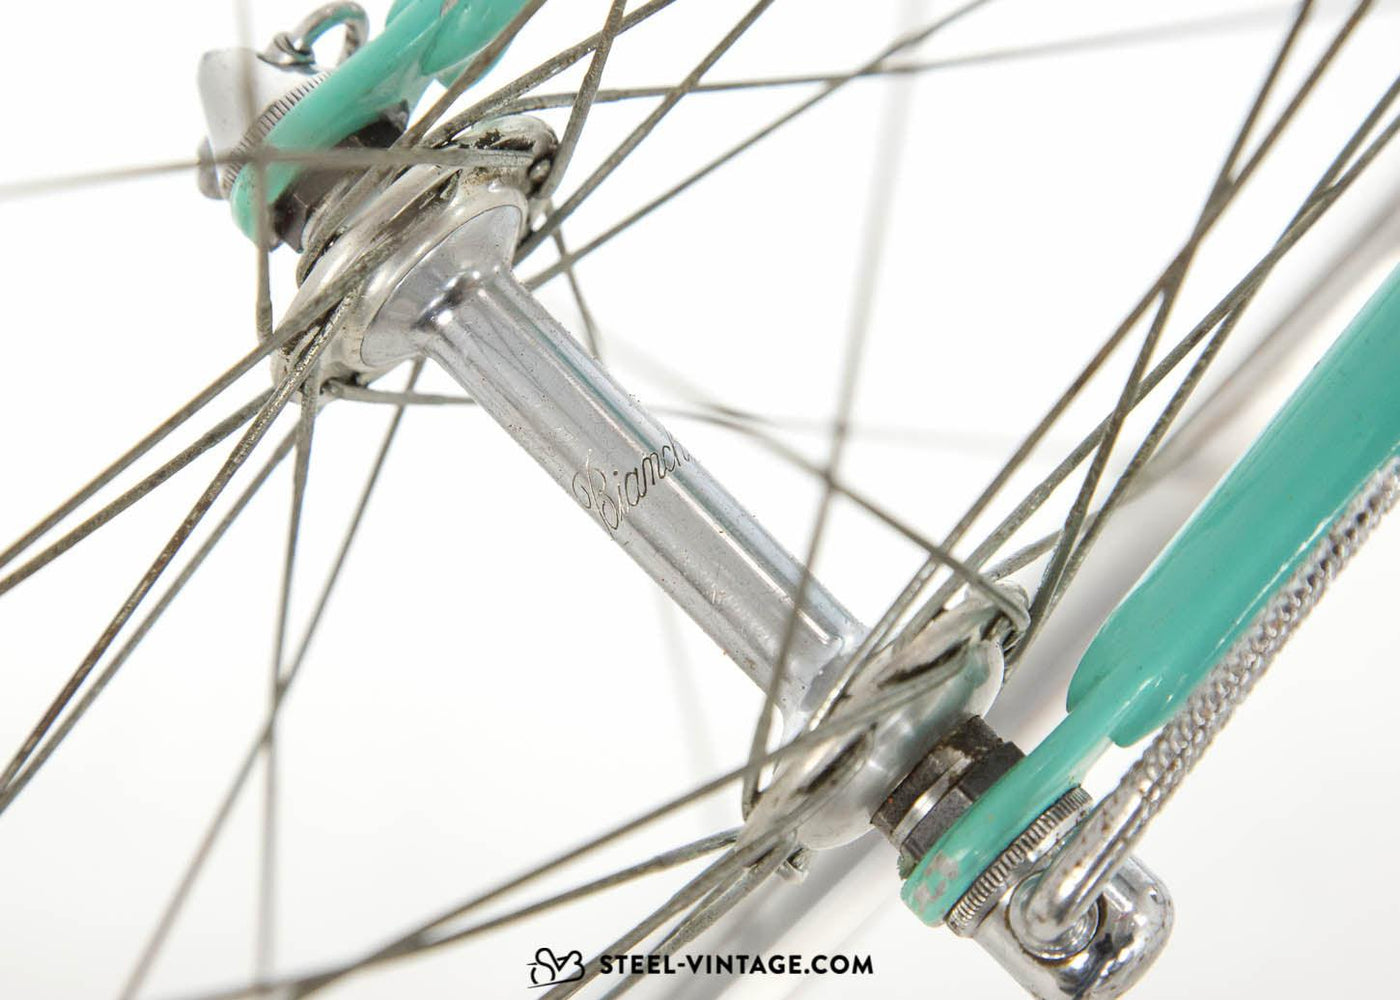 Bianchi Campione Del Mondo Road Bike 1950s - Steel Vintage Bikes